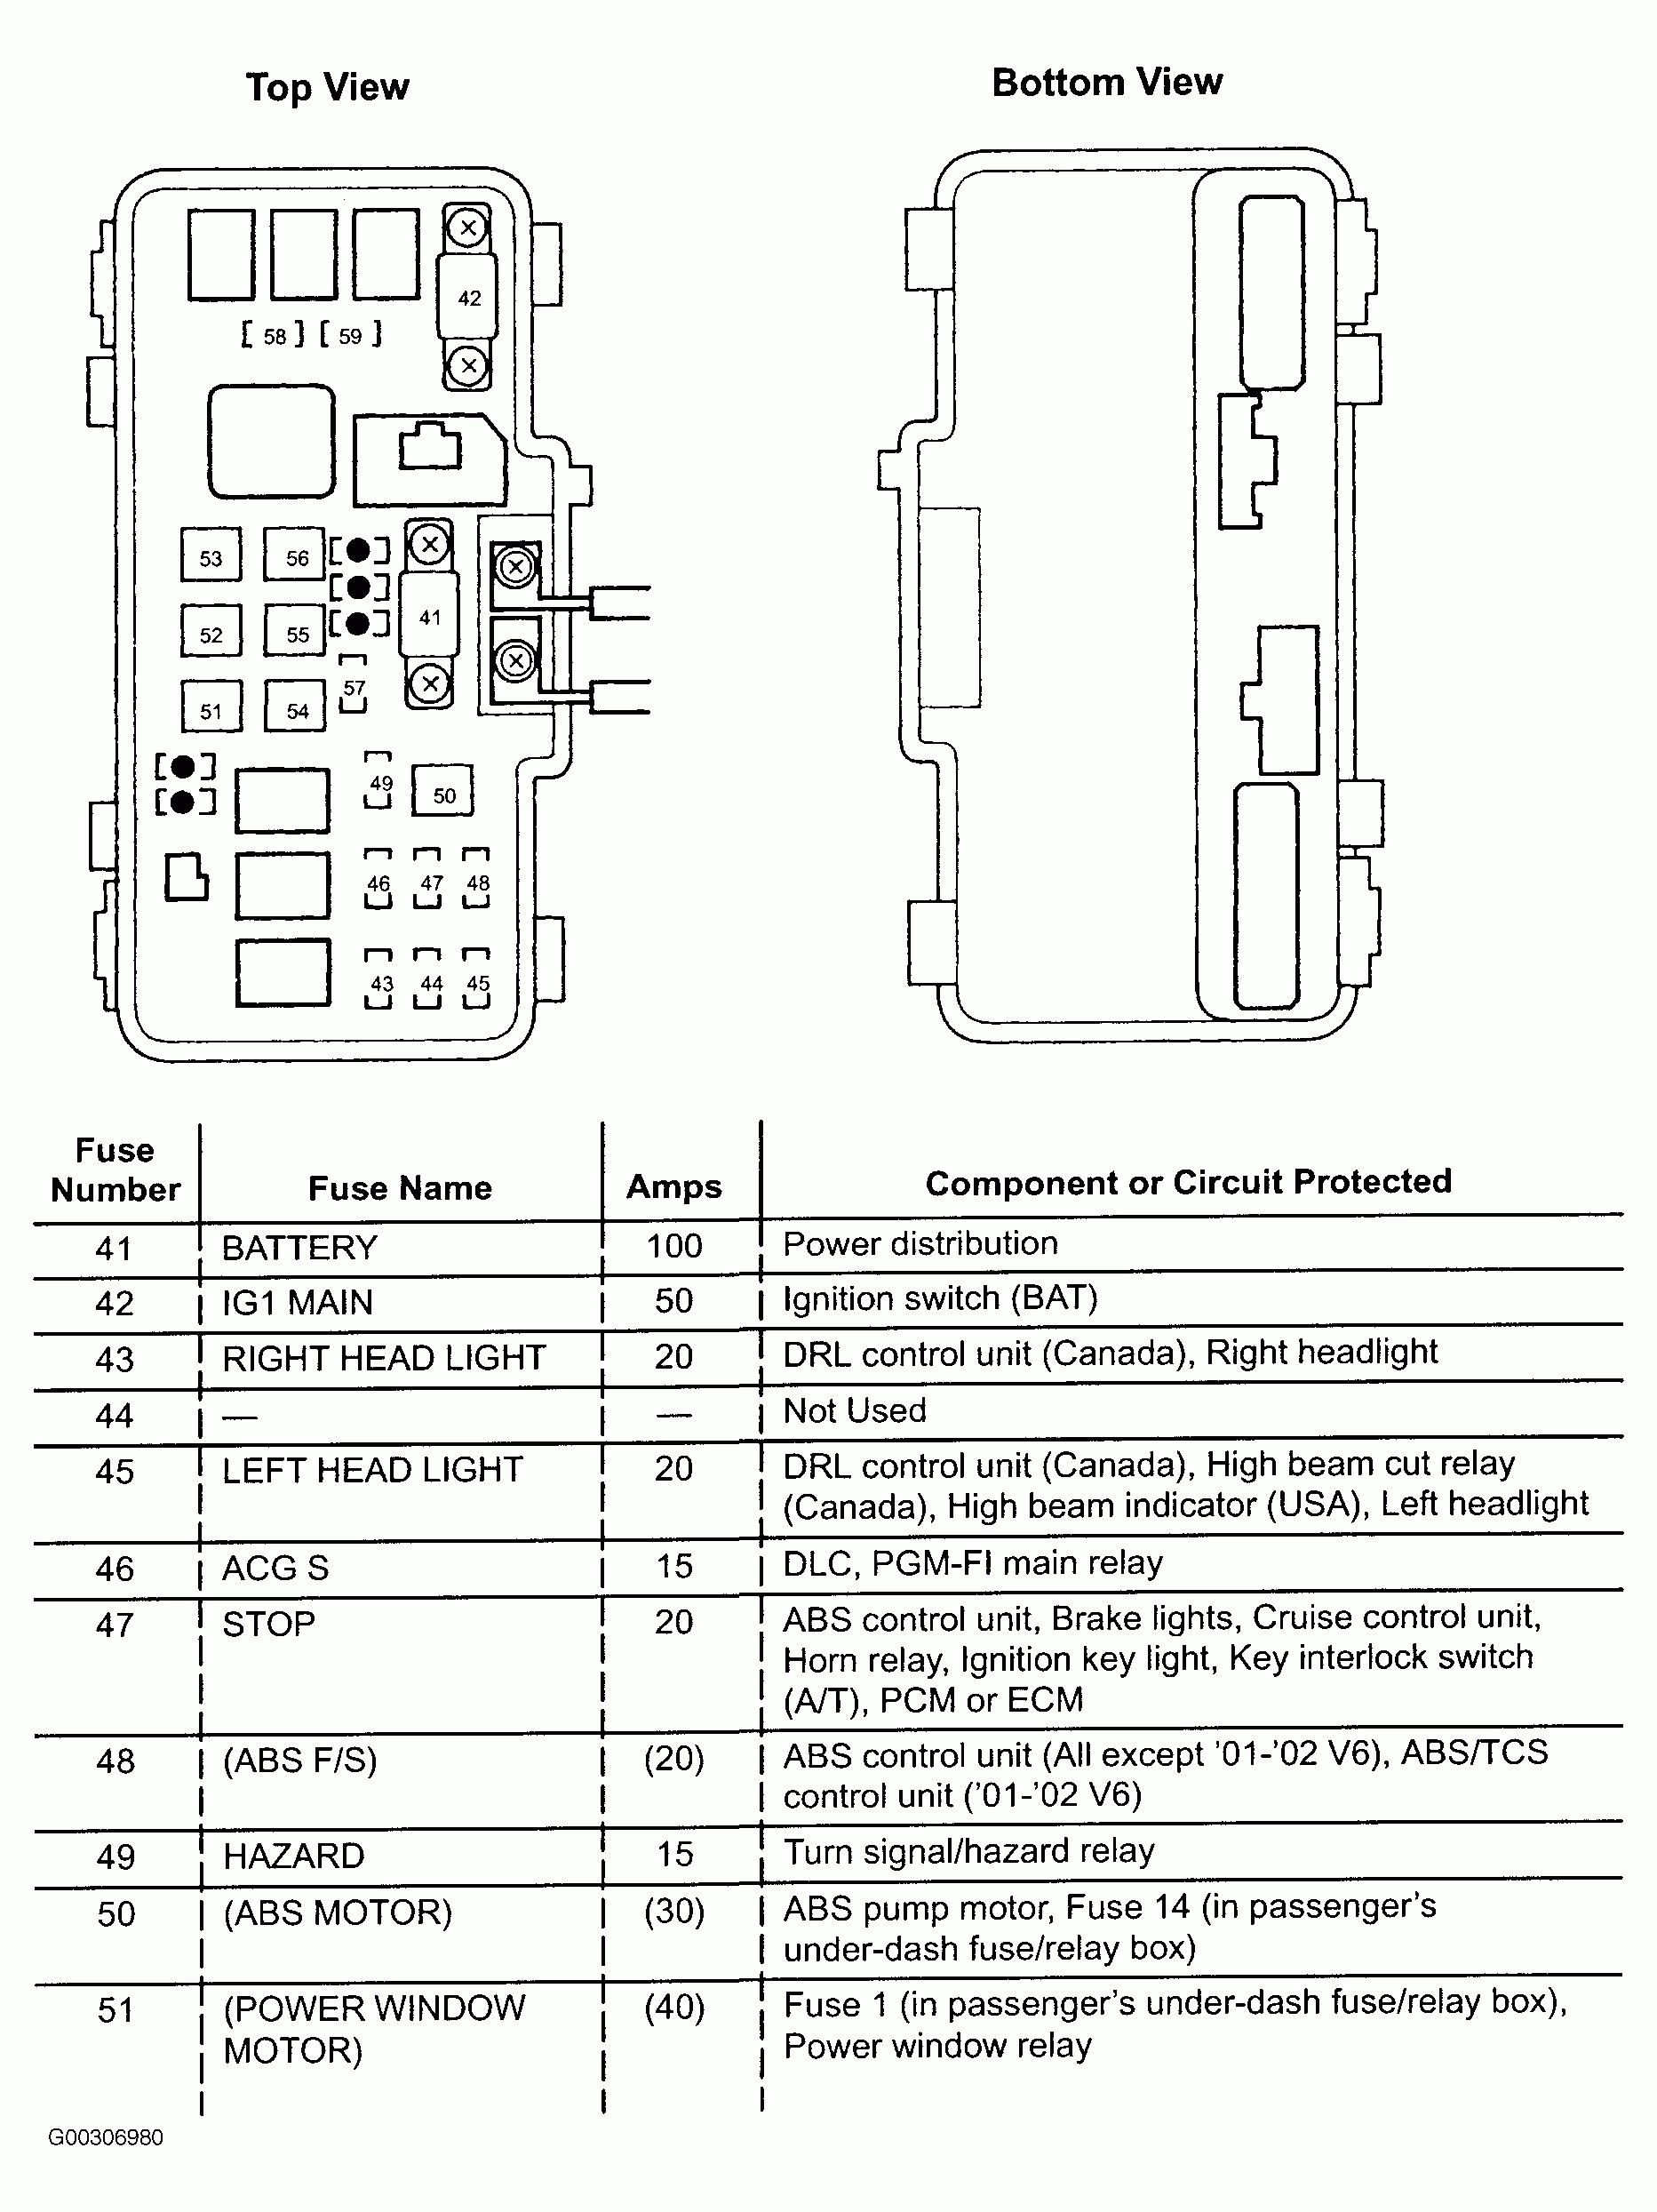 2007 Honda Accord Engine Diagram Wiring Diagram for 2007 Honda Accord Wiring Diagram Used Of 2007 Honda Accord Engine Diagram